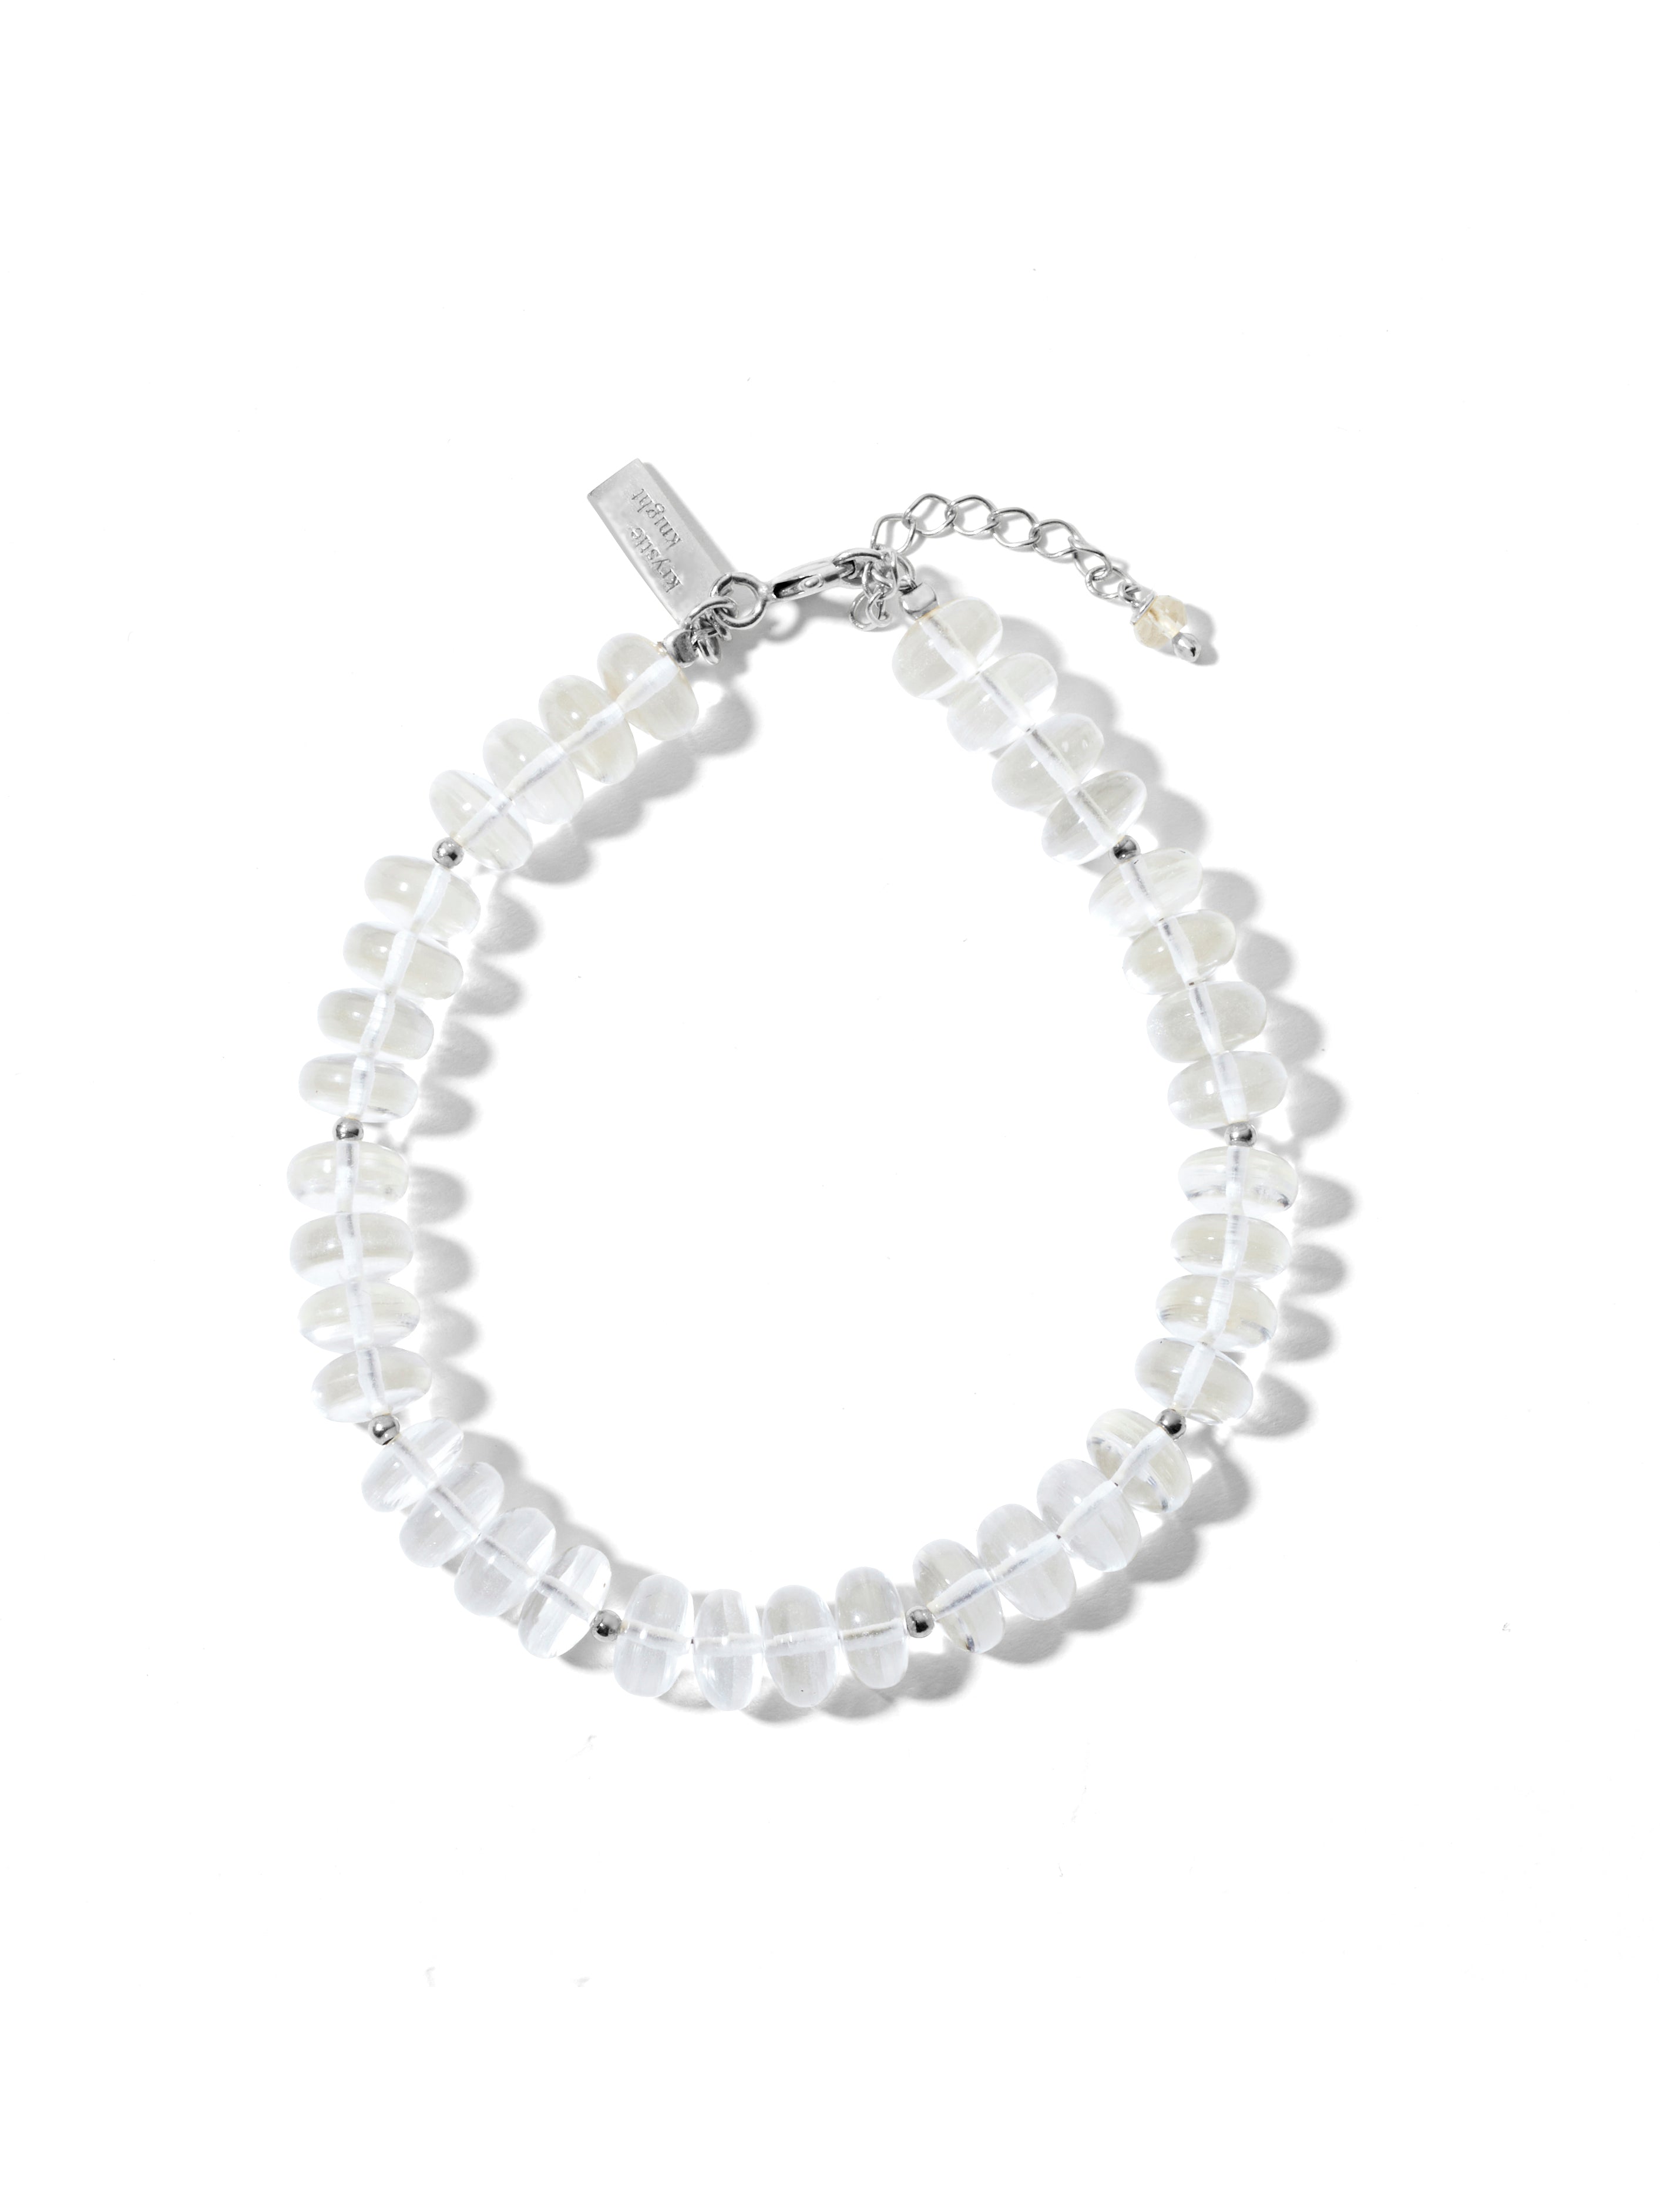 evoke bracelet | clear quartz